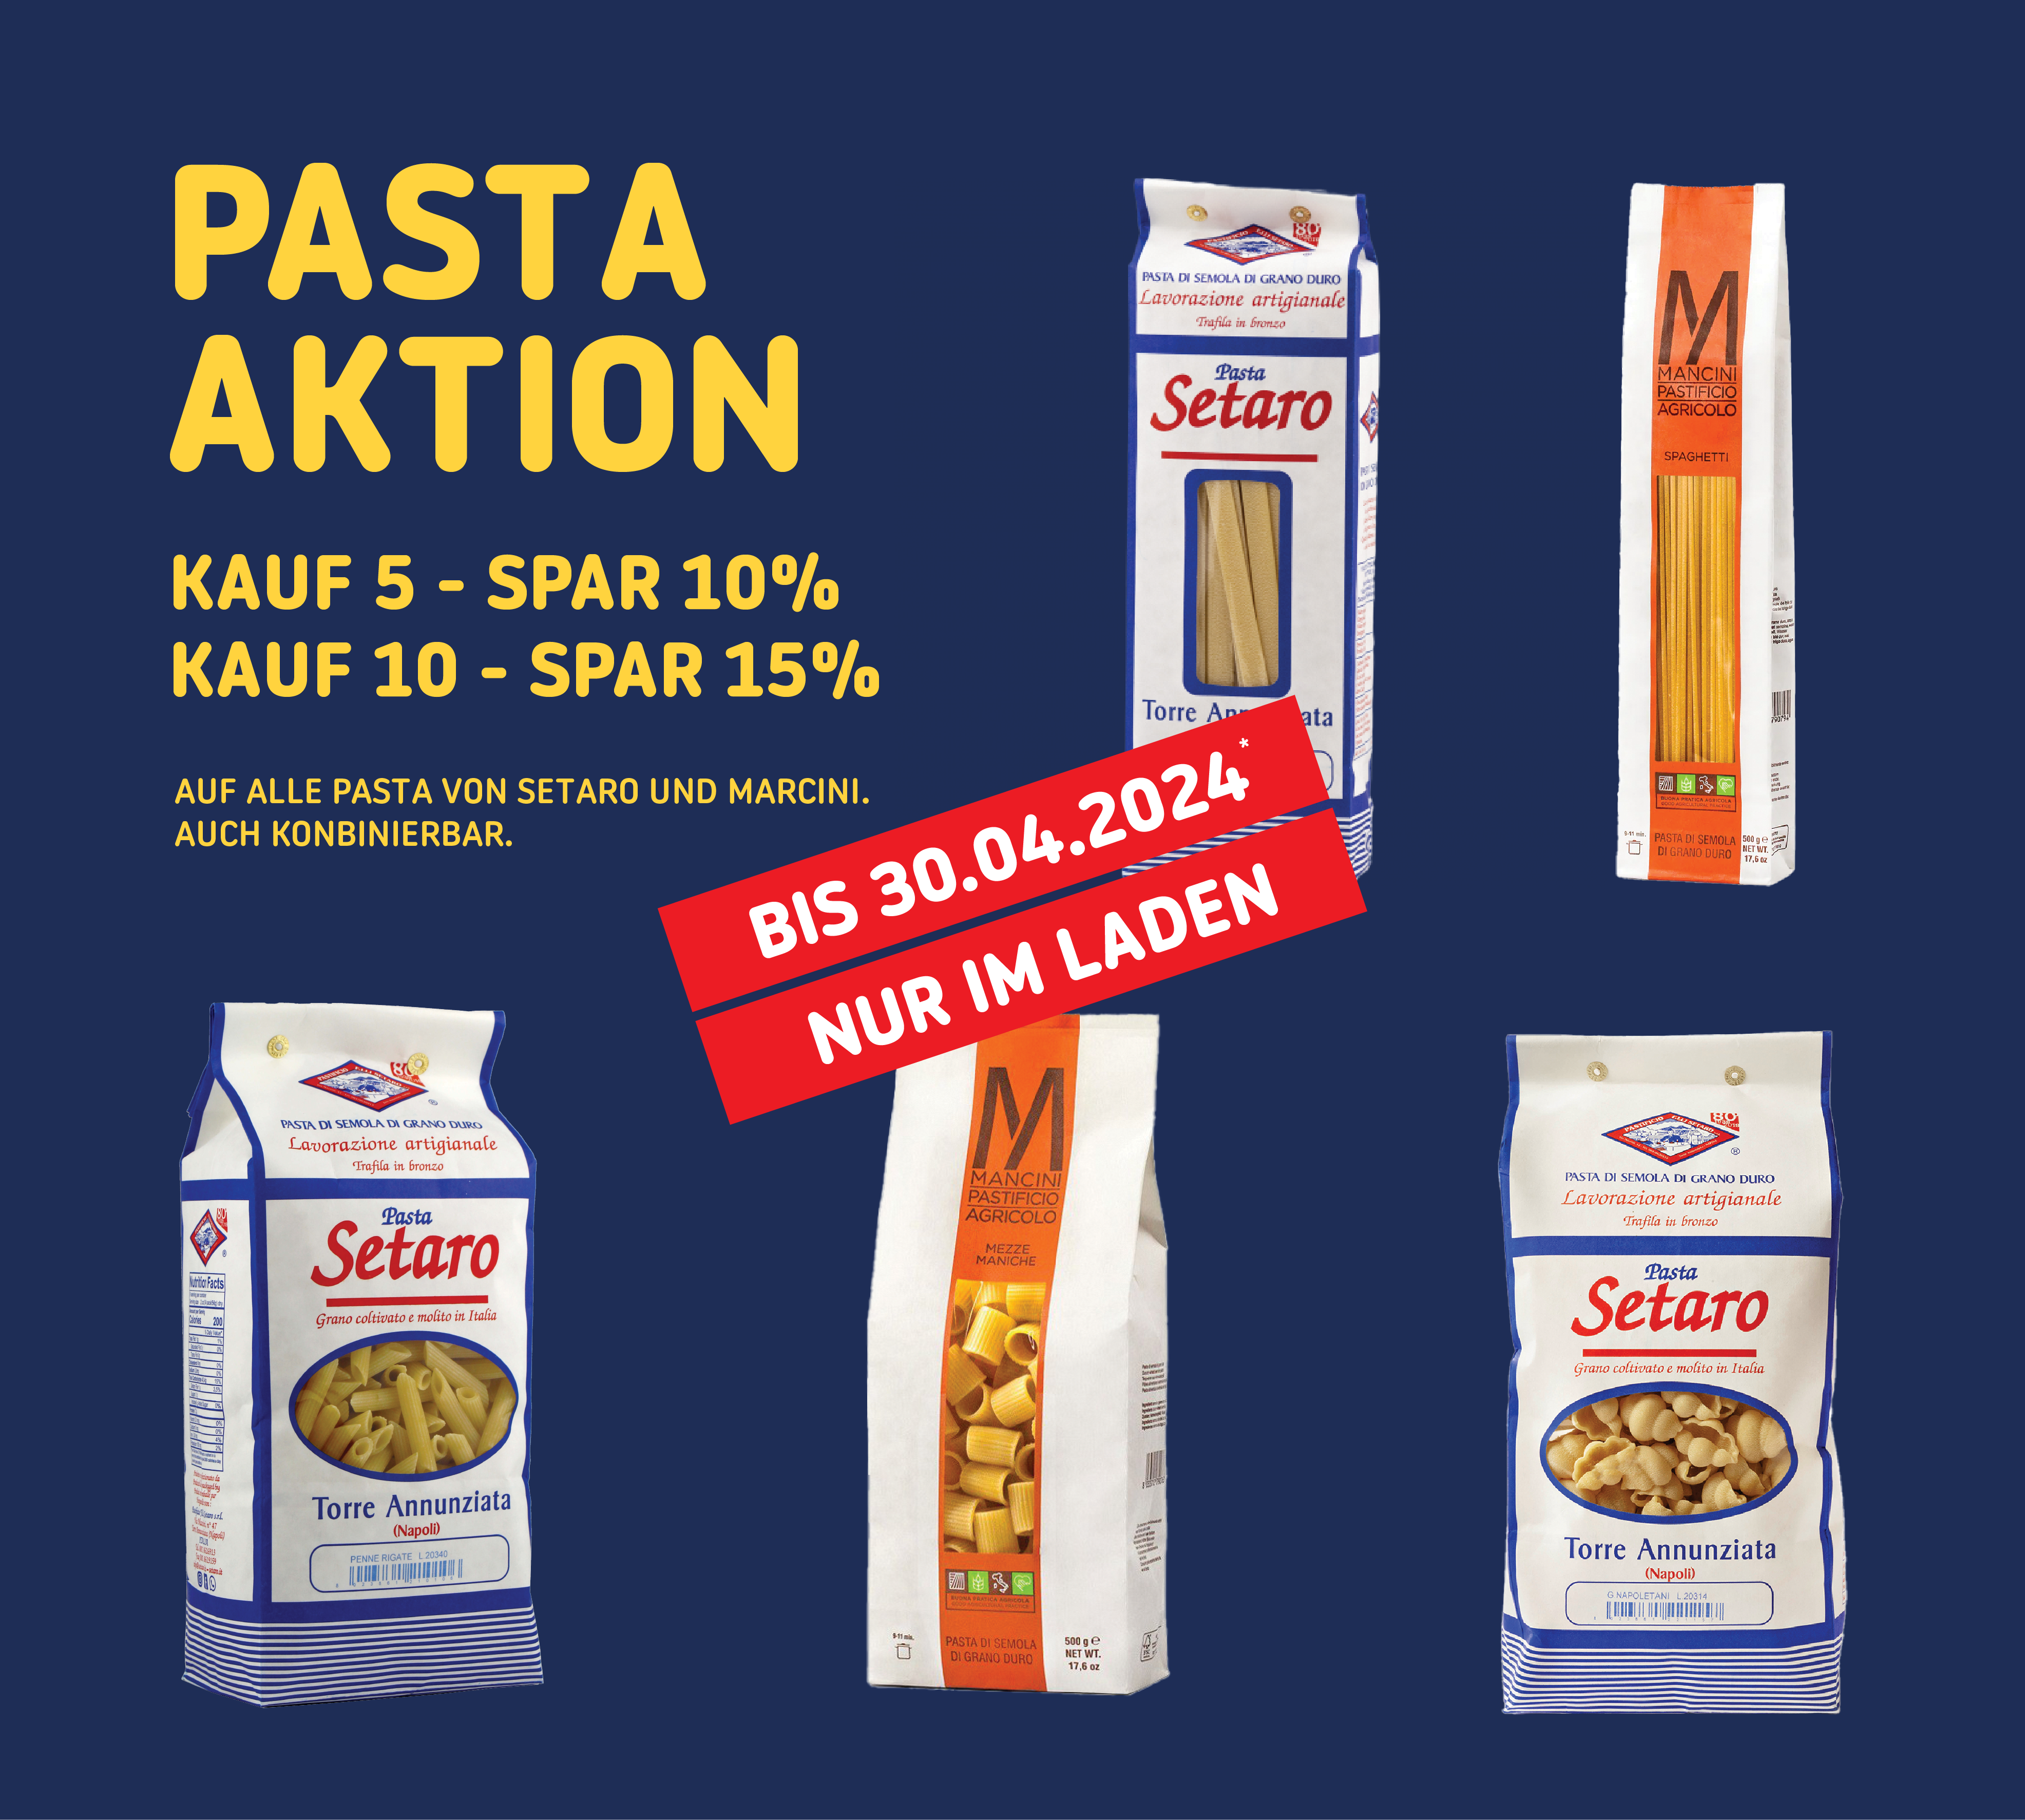 Pasta Aktion - Setaro and Mancini